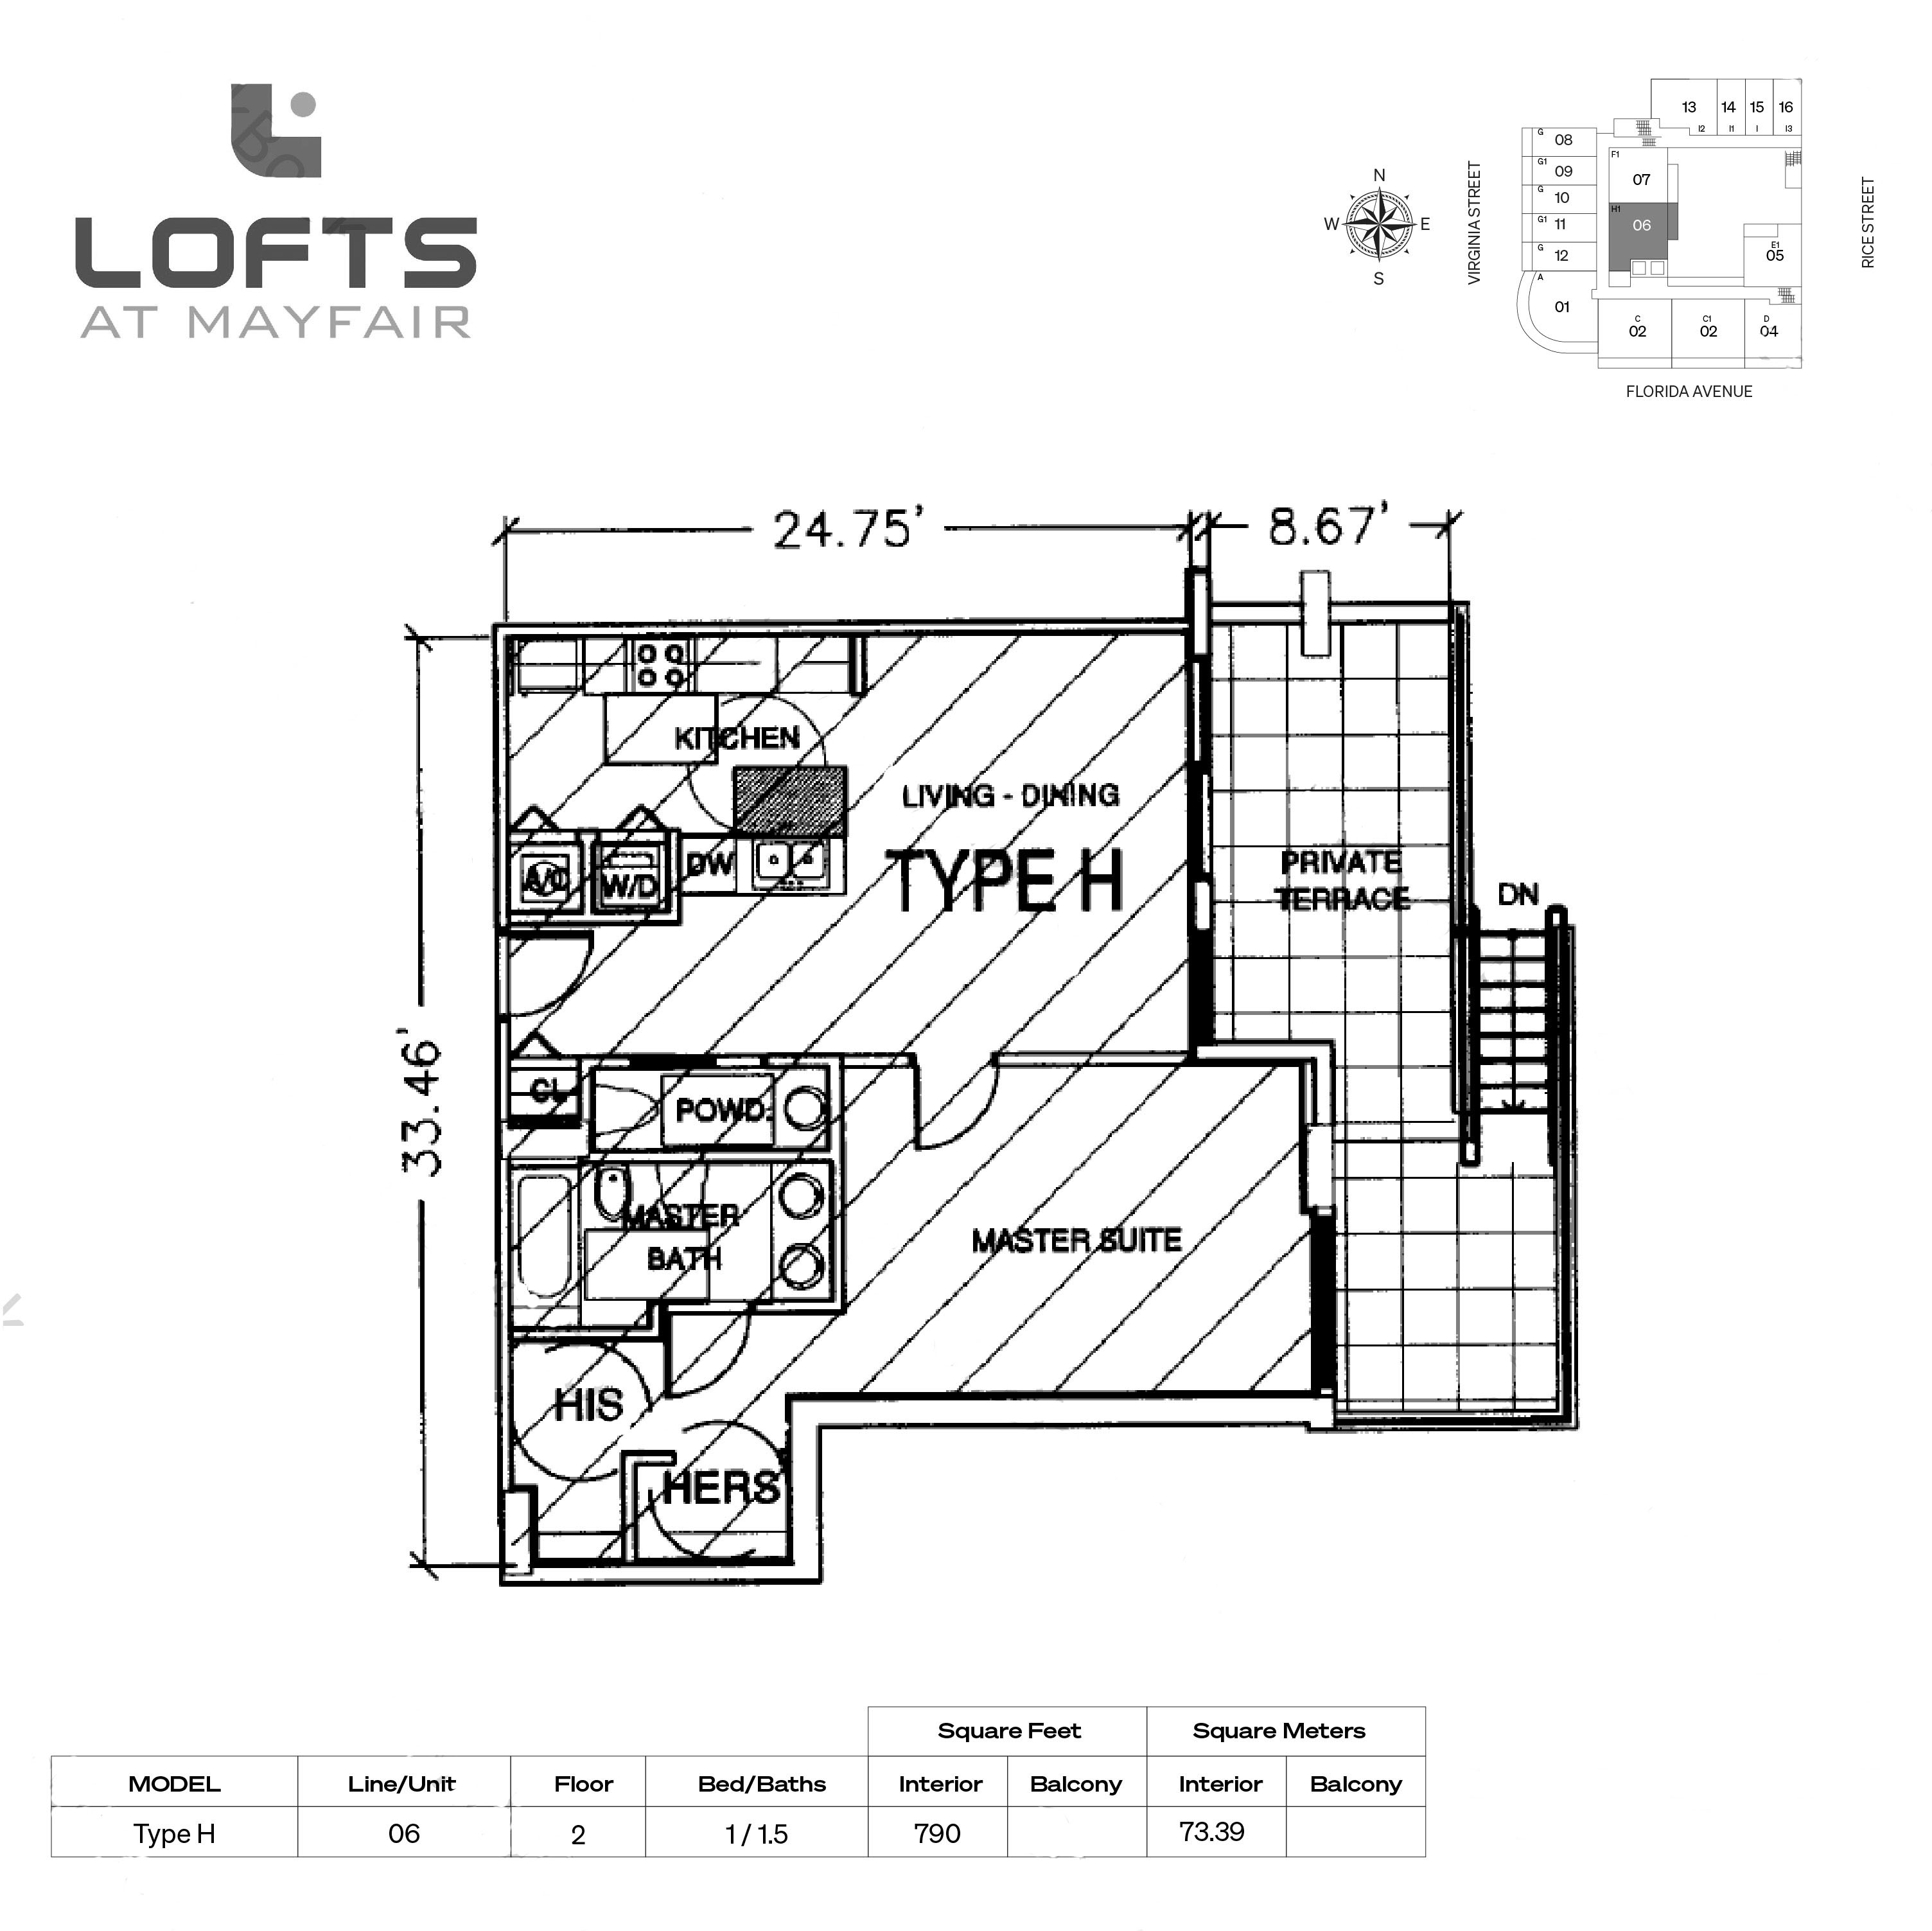 Lofts at Mayfair Type H